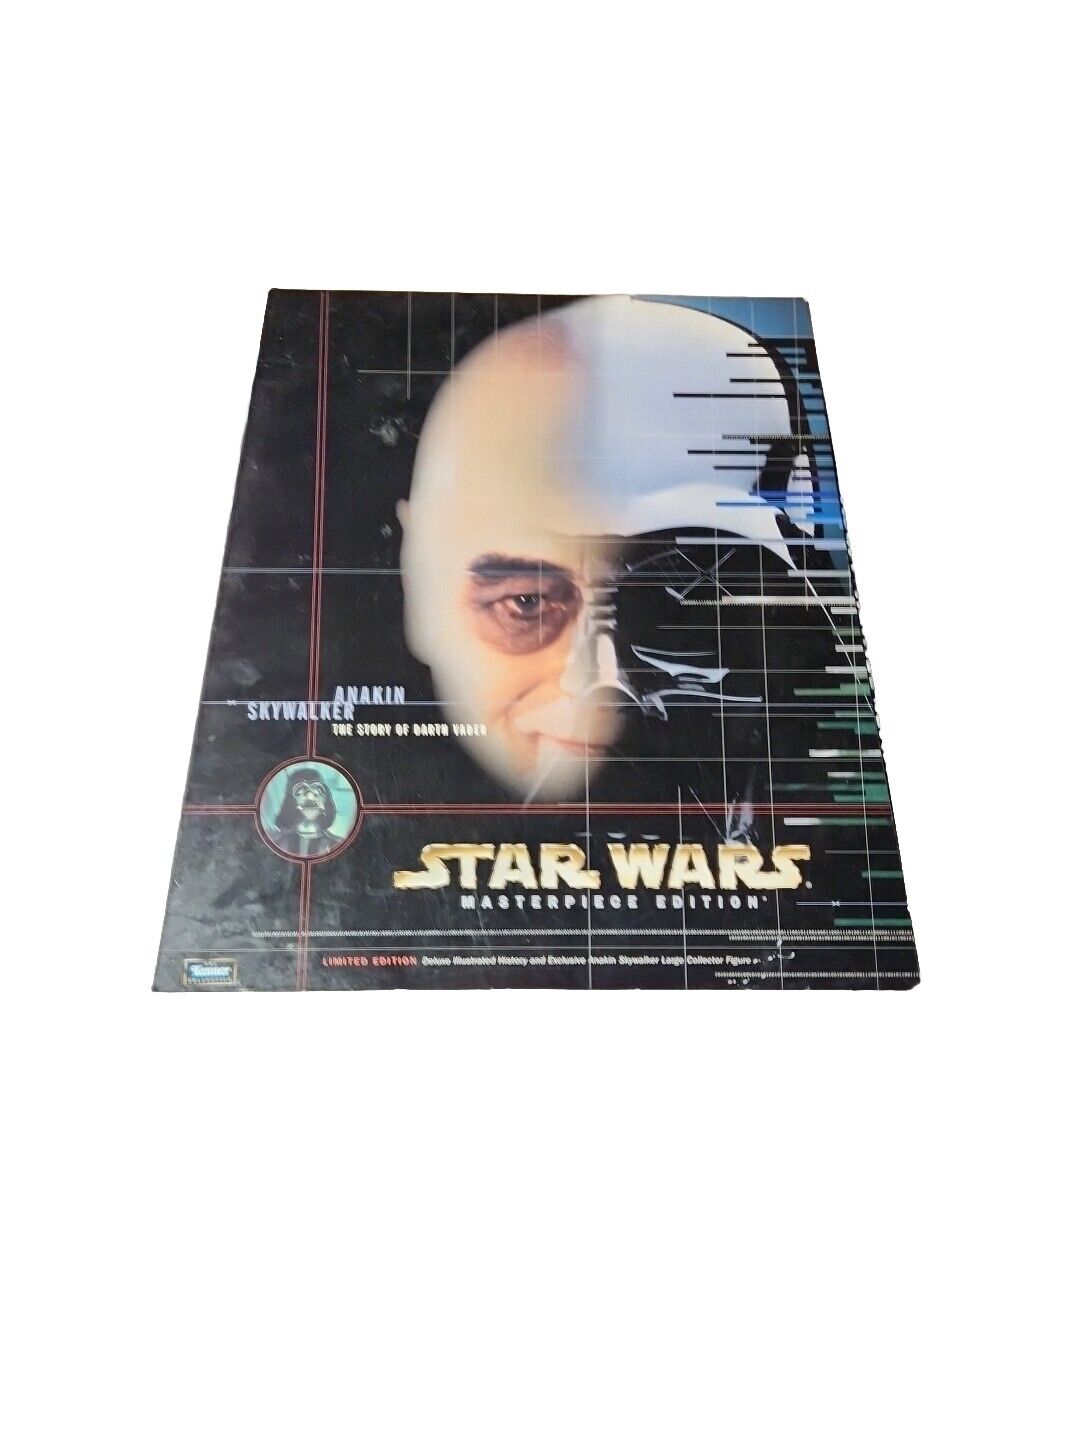 1998 Star Wars Masterpiece Edition Anakin Skywalker - The Story Of Darth Vader